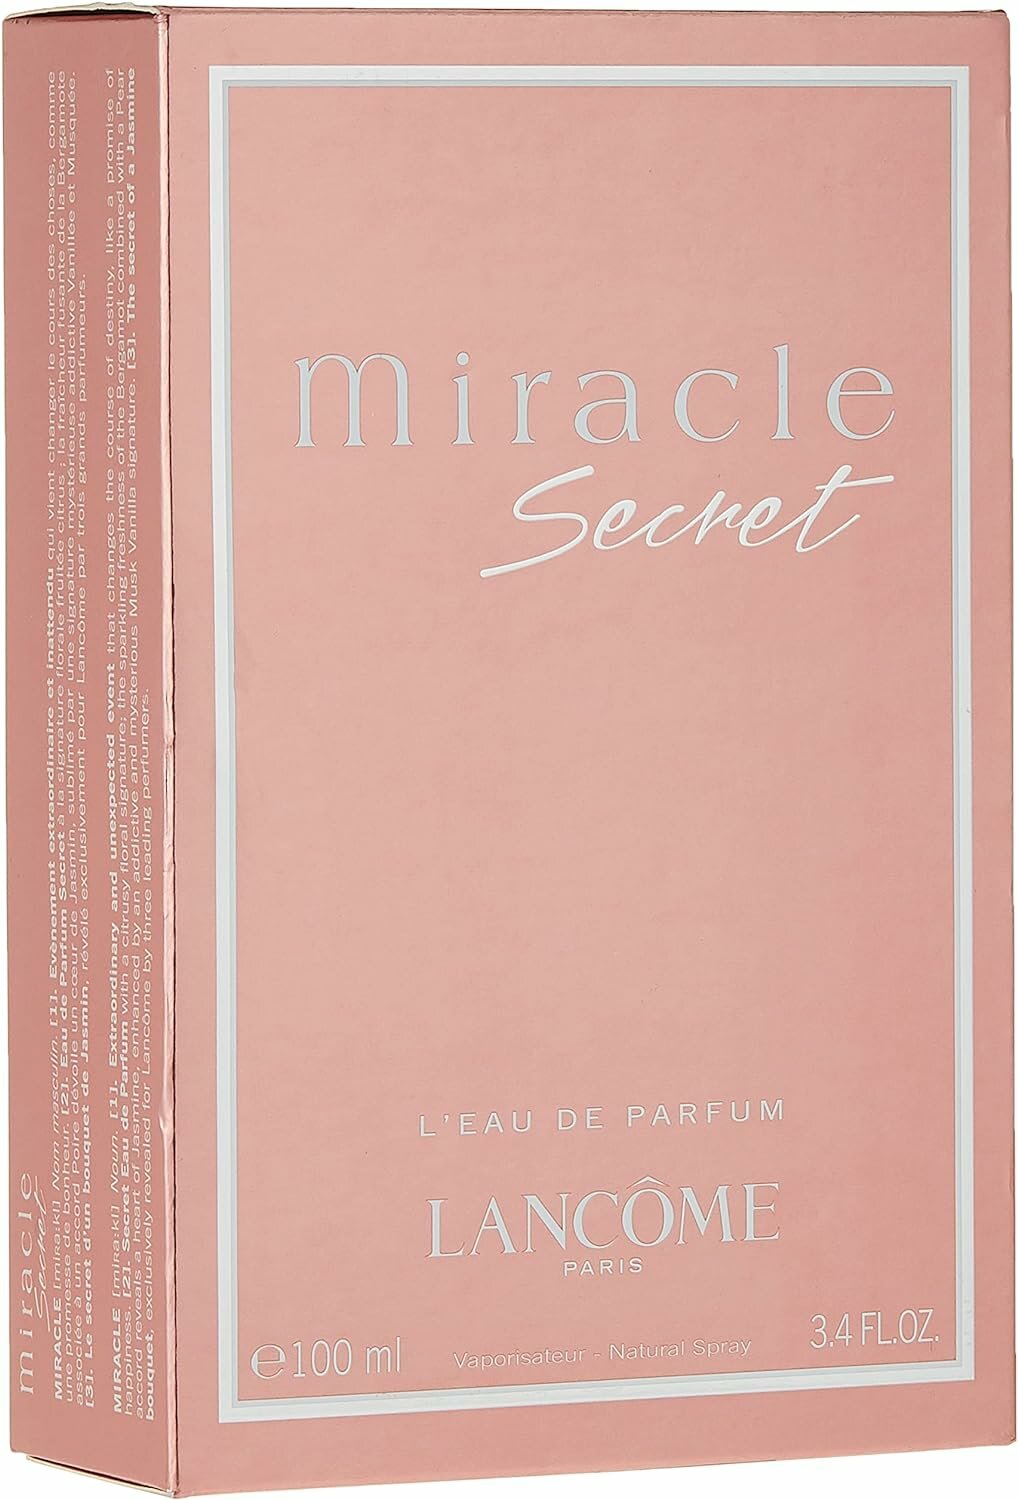 Lancome Miracle Secret Парфюмерная вода 100мл